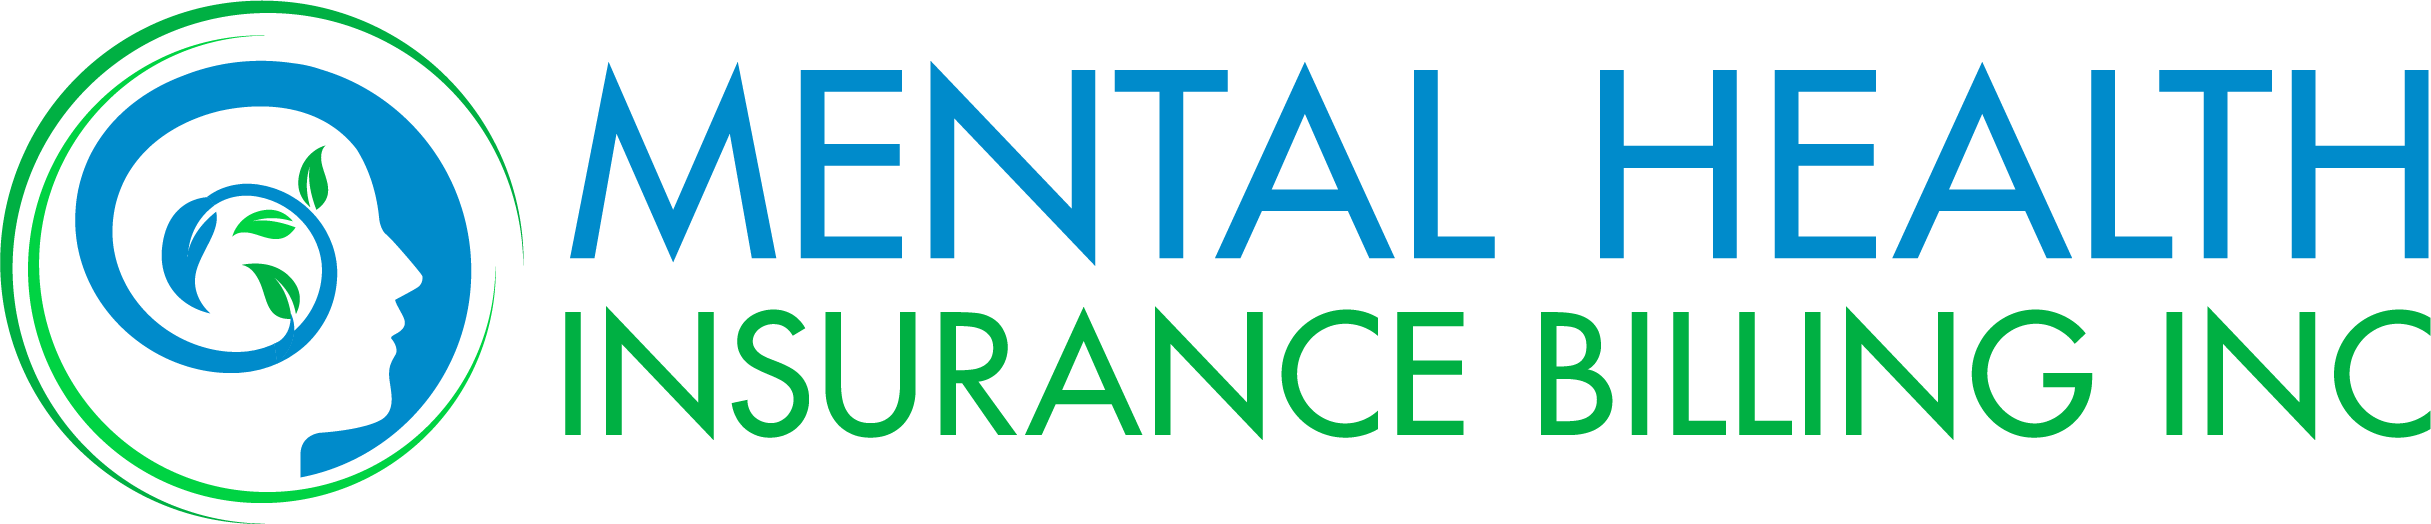 Mental Health Insurance Billing Inc. 